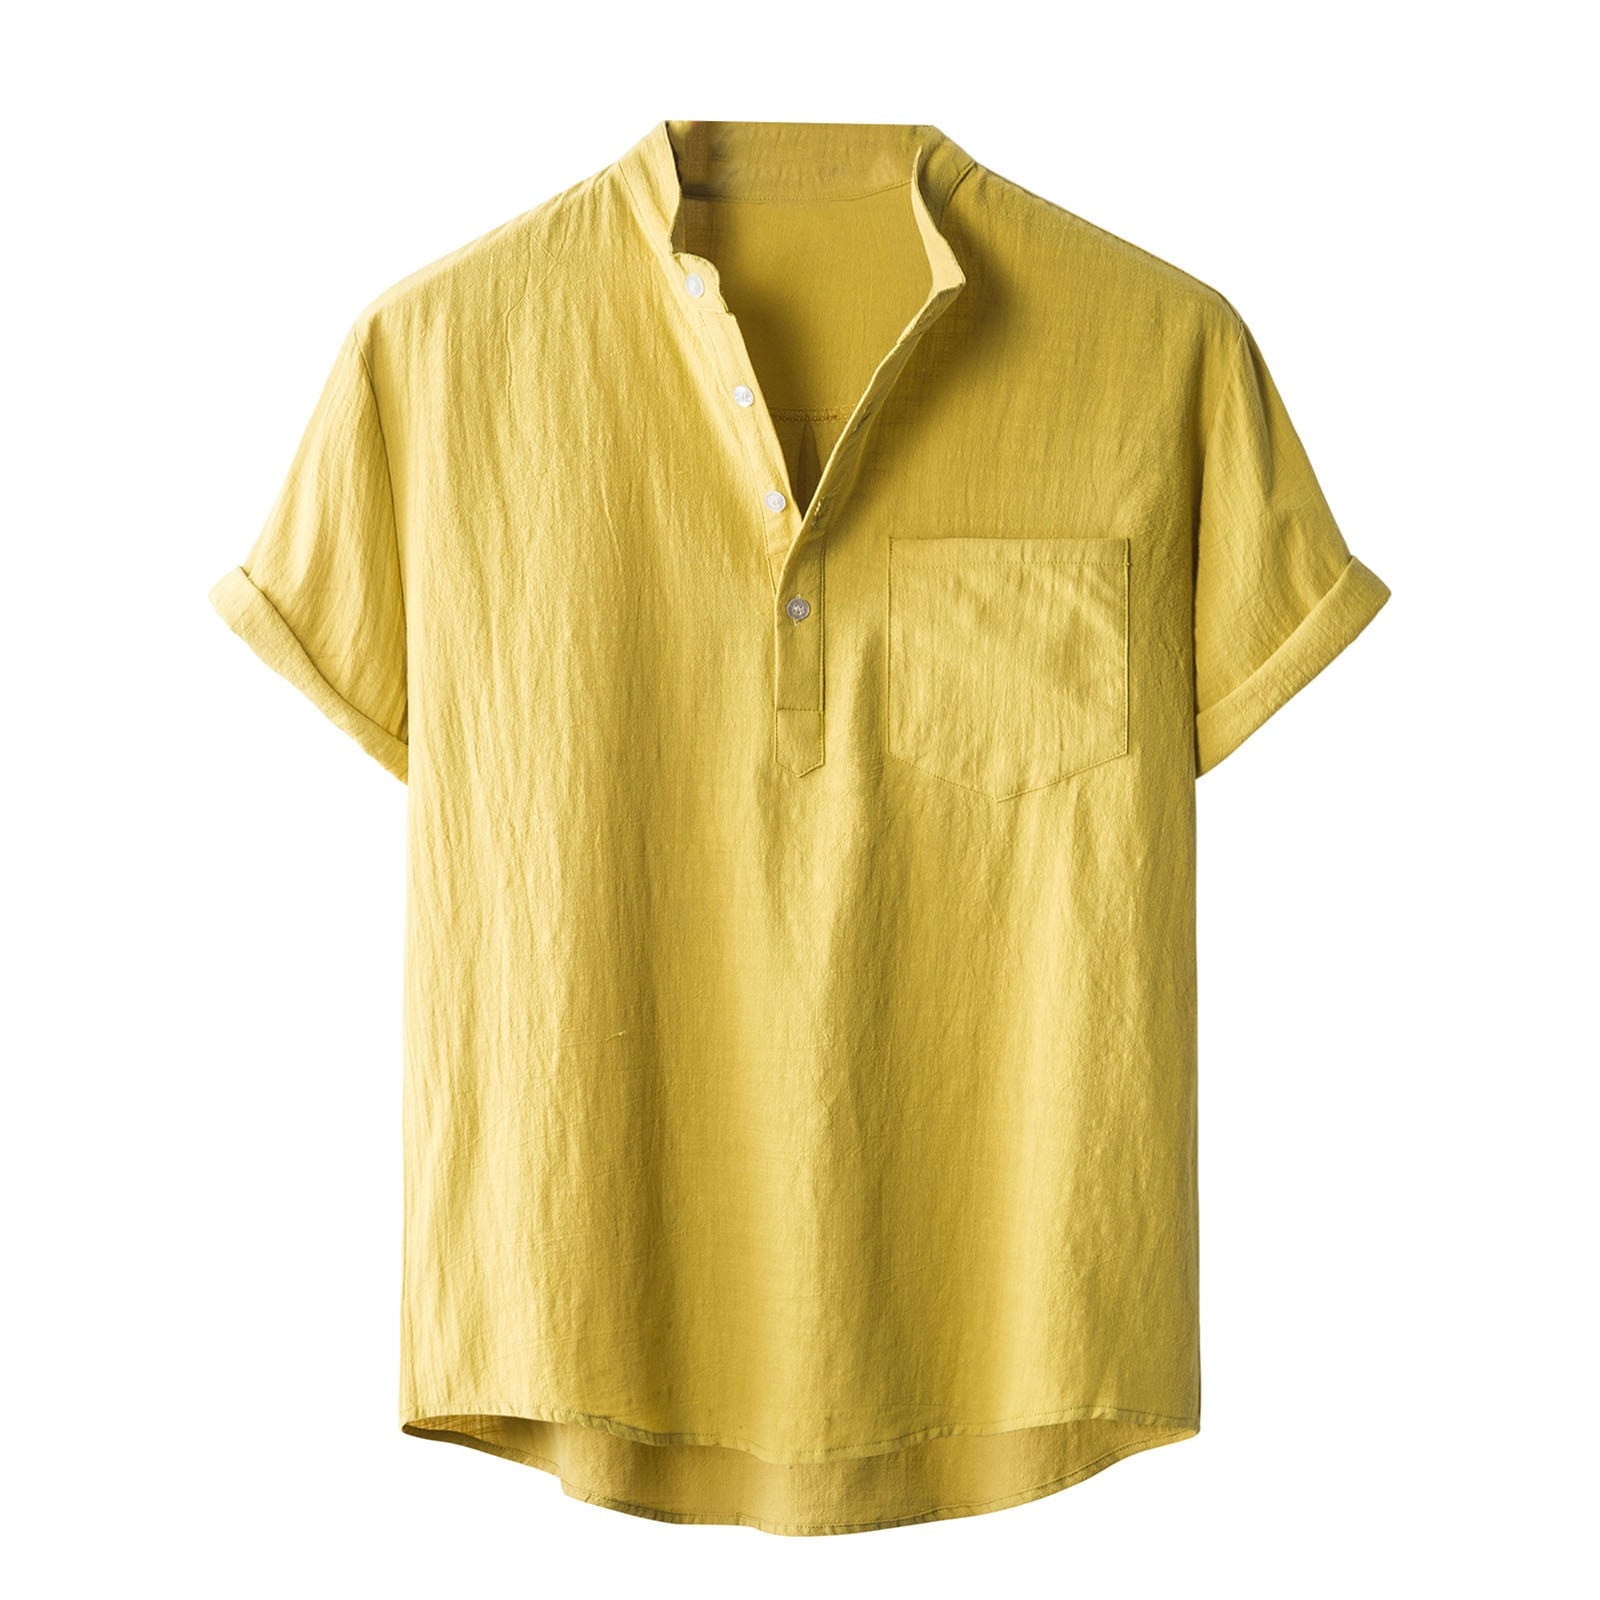 RYRJJ Men Linen Henley Shirts Casual Short Sleeve Solid Color/Plaid Print  Button Up Shirt Summer Hawaiian Vacation Beach Tee Tops(Yellow,XL)